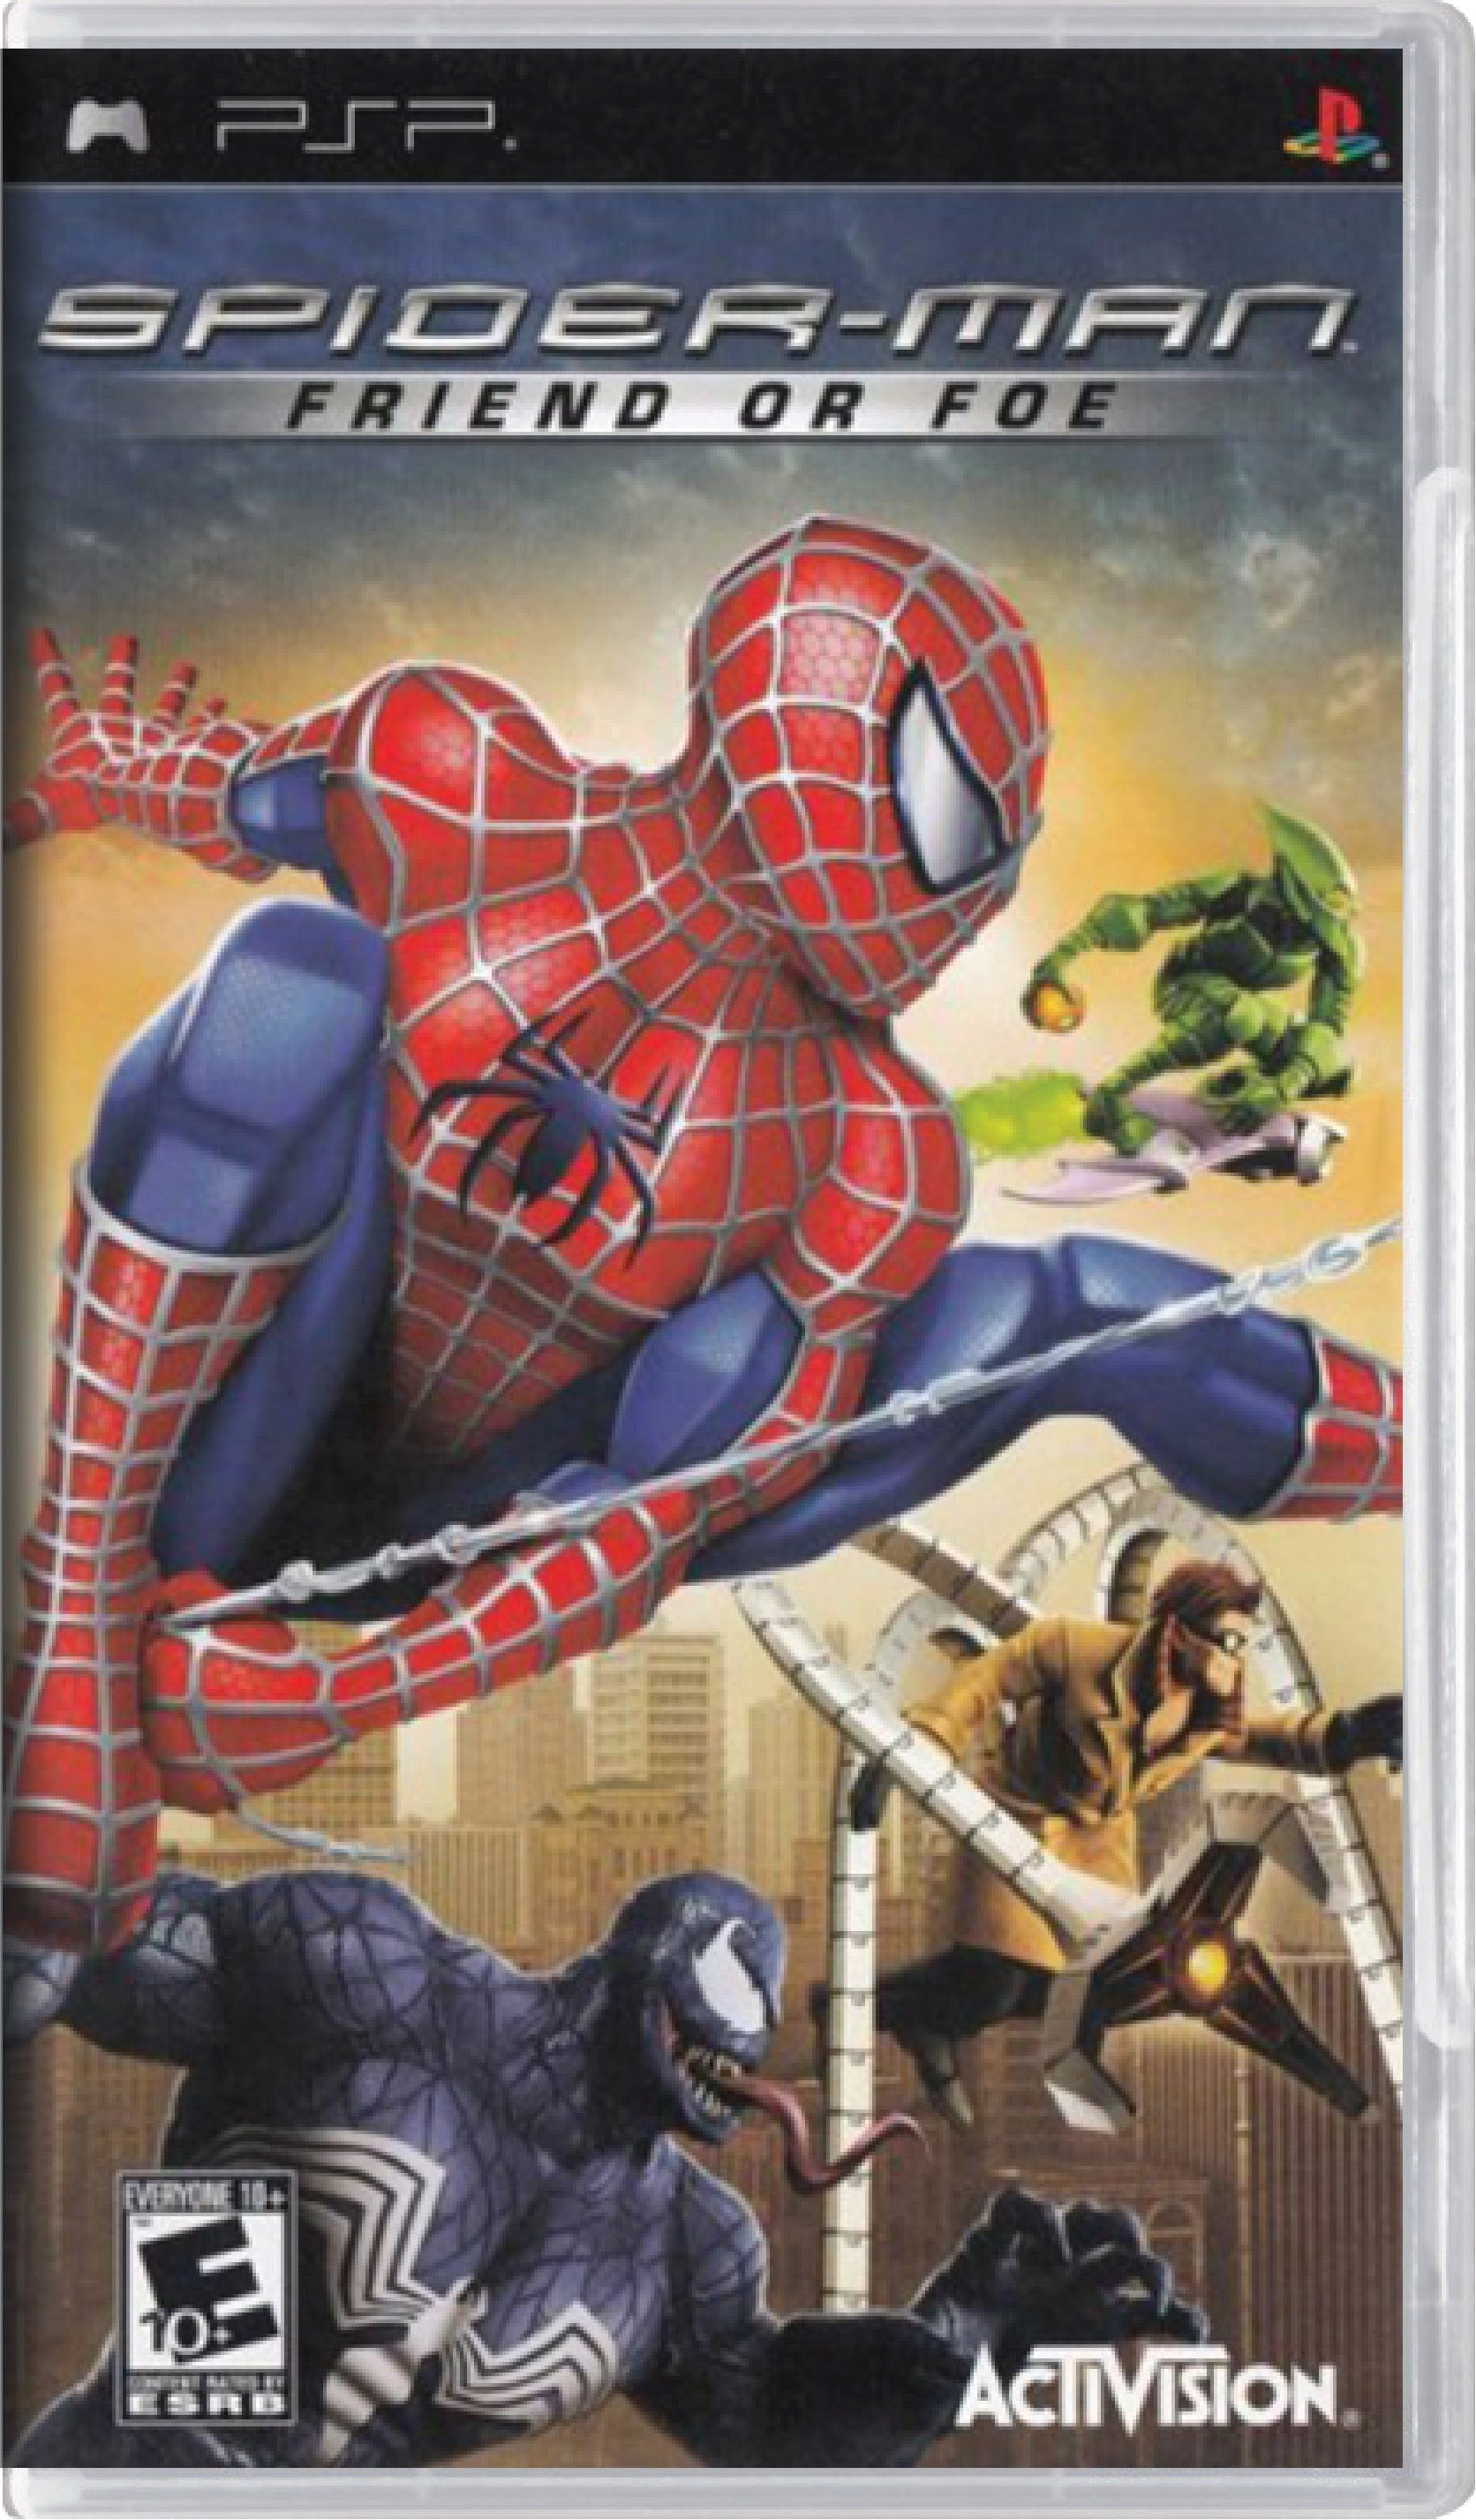 Spider-Man Friend or Foe Cover Art